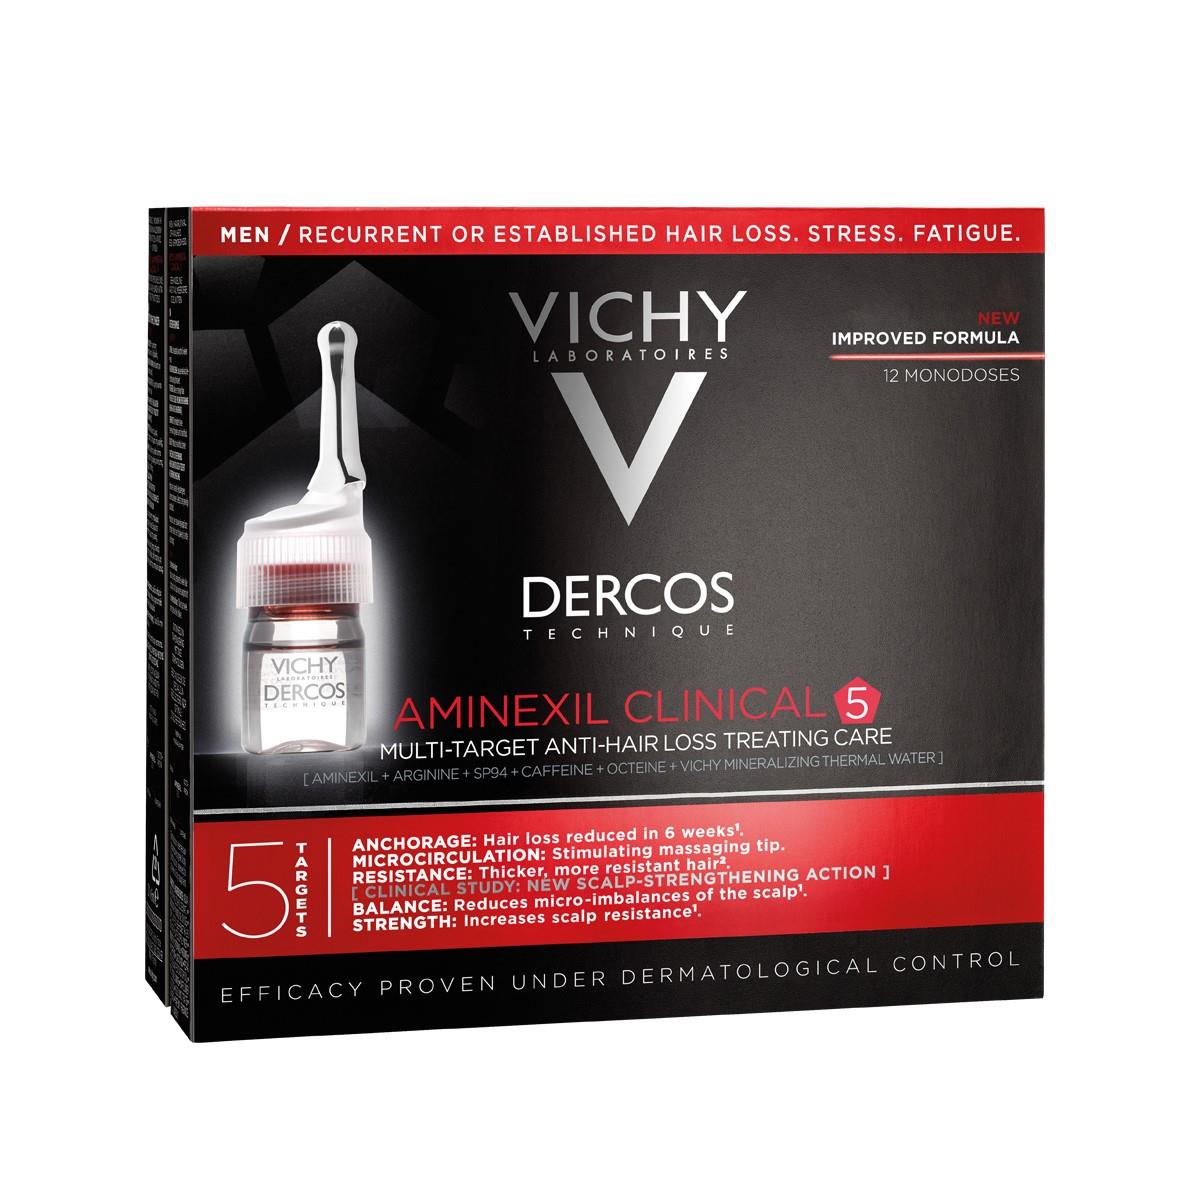 VICHY DERCOS AMINEXIL CLINICAL 5 AMPOLLETAS HOMBRE 12DS | The Glow Shop